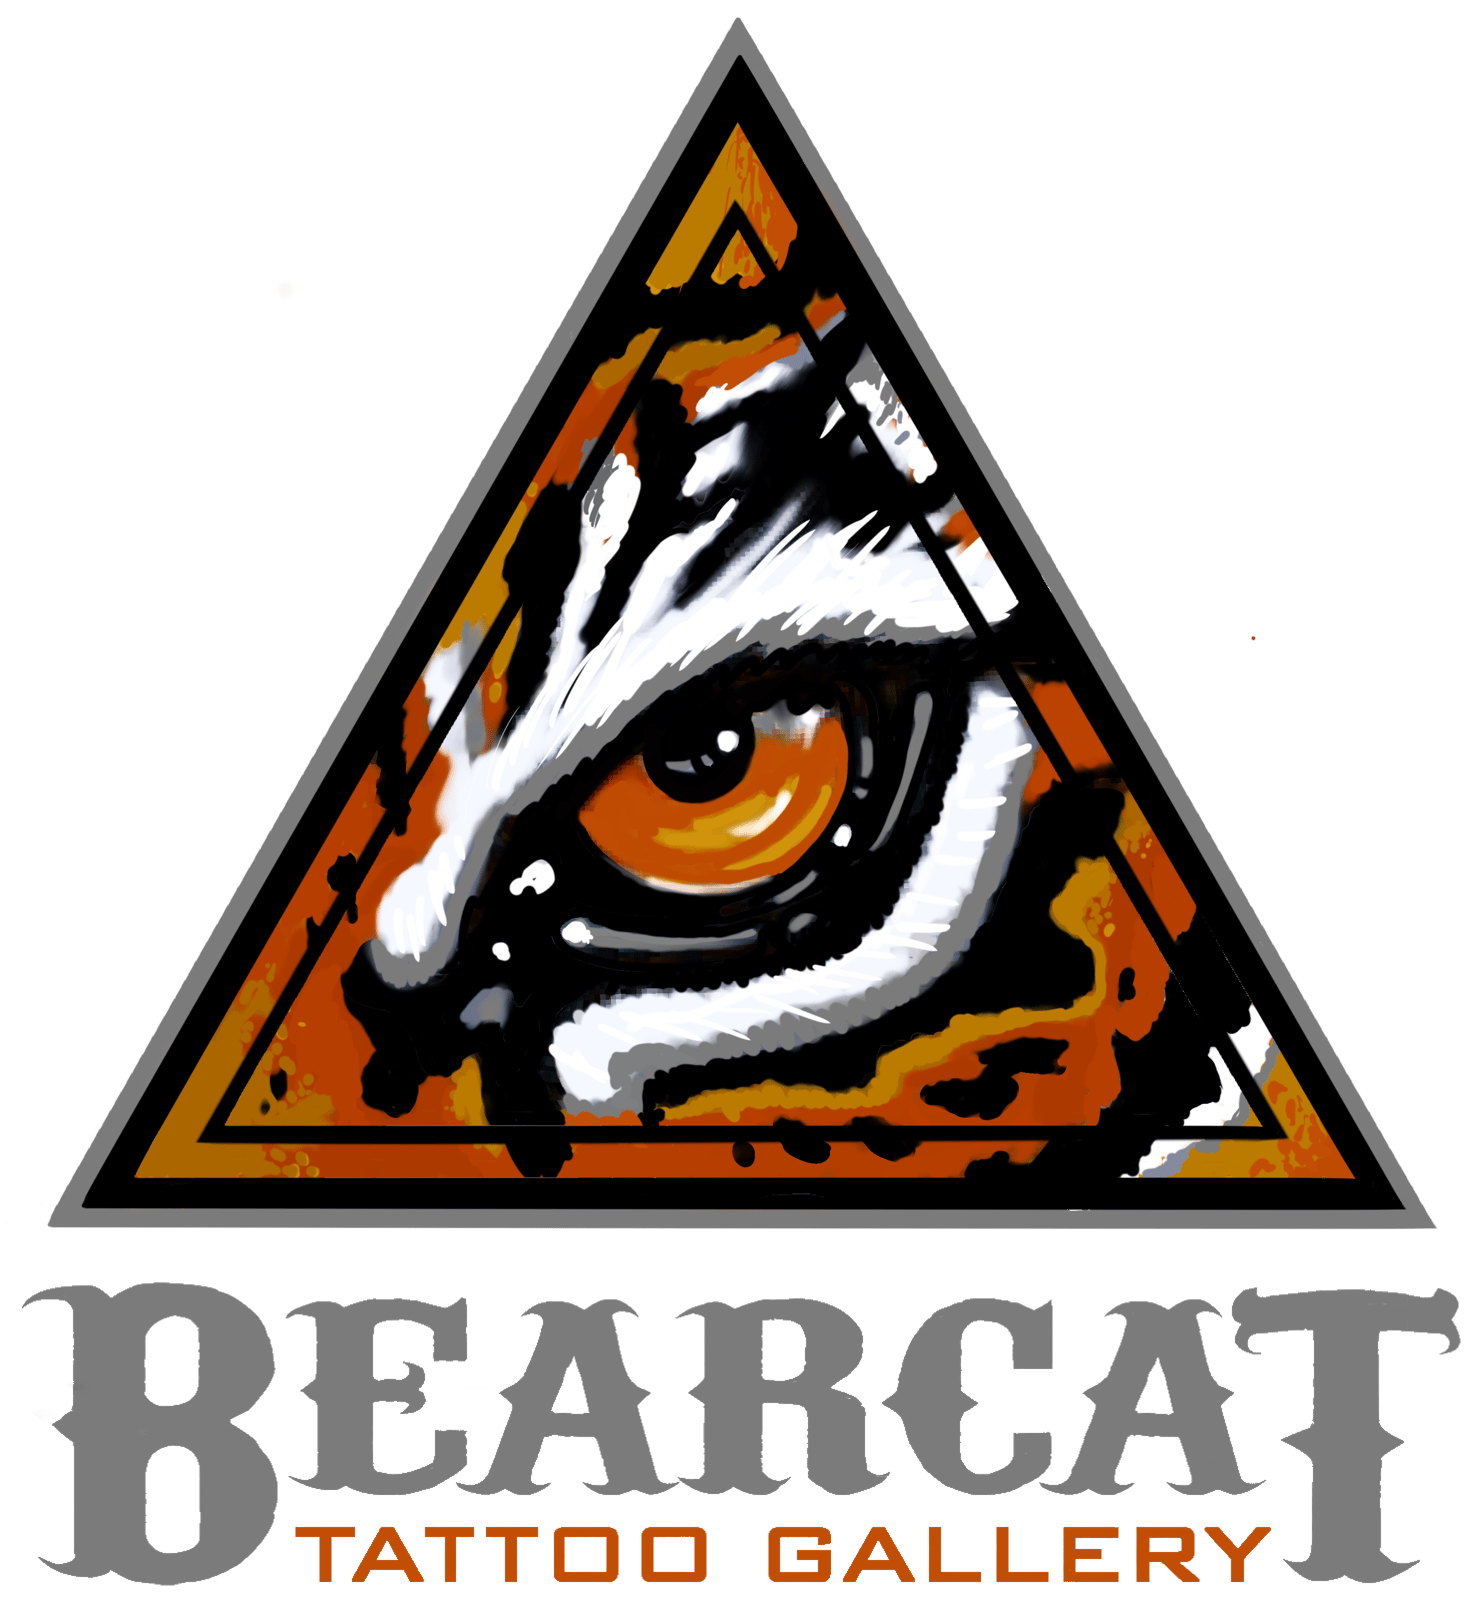 Bearcat Gallery